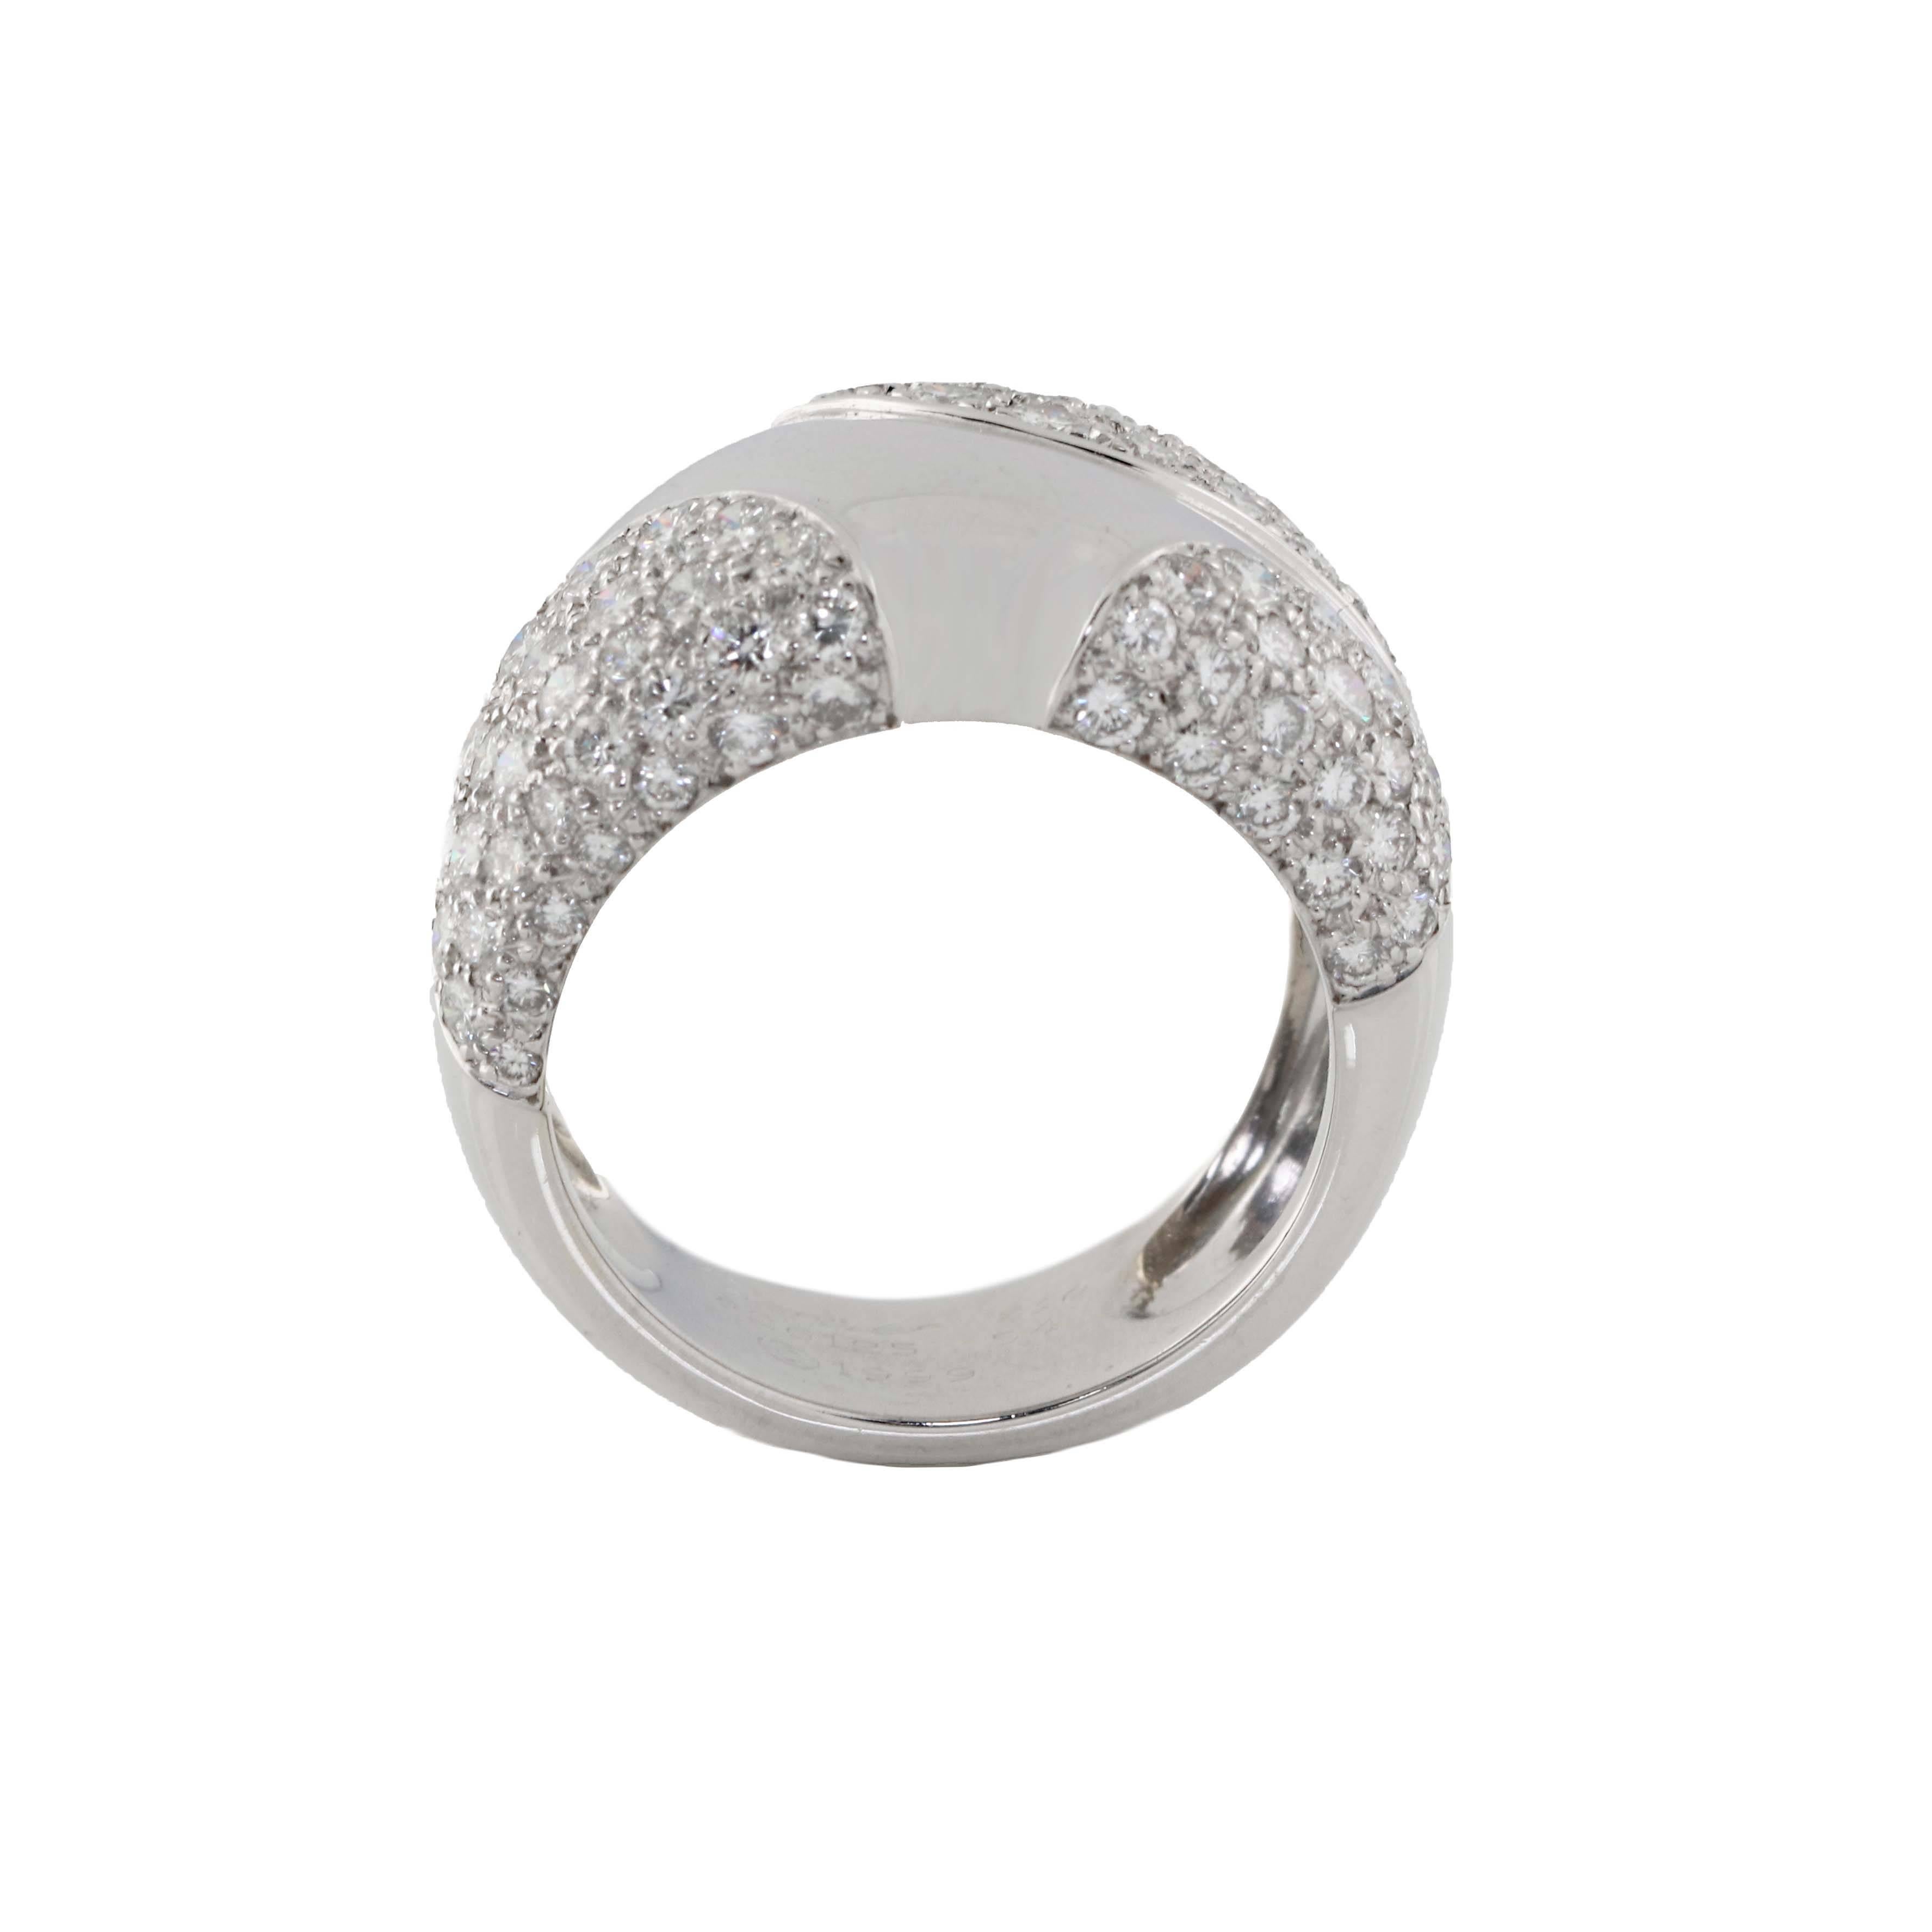 Modern Cartier 18kt White Gold Diamond Band Ring. Size 6.